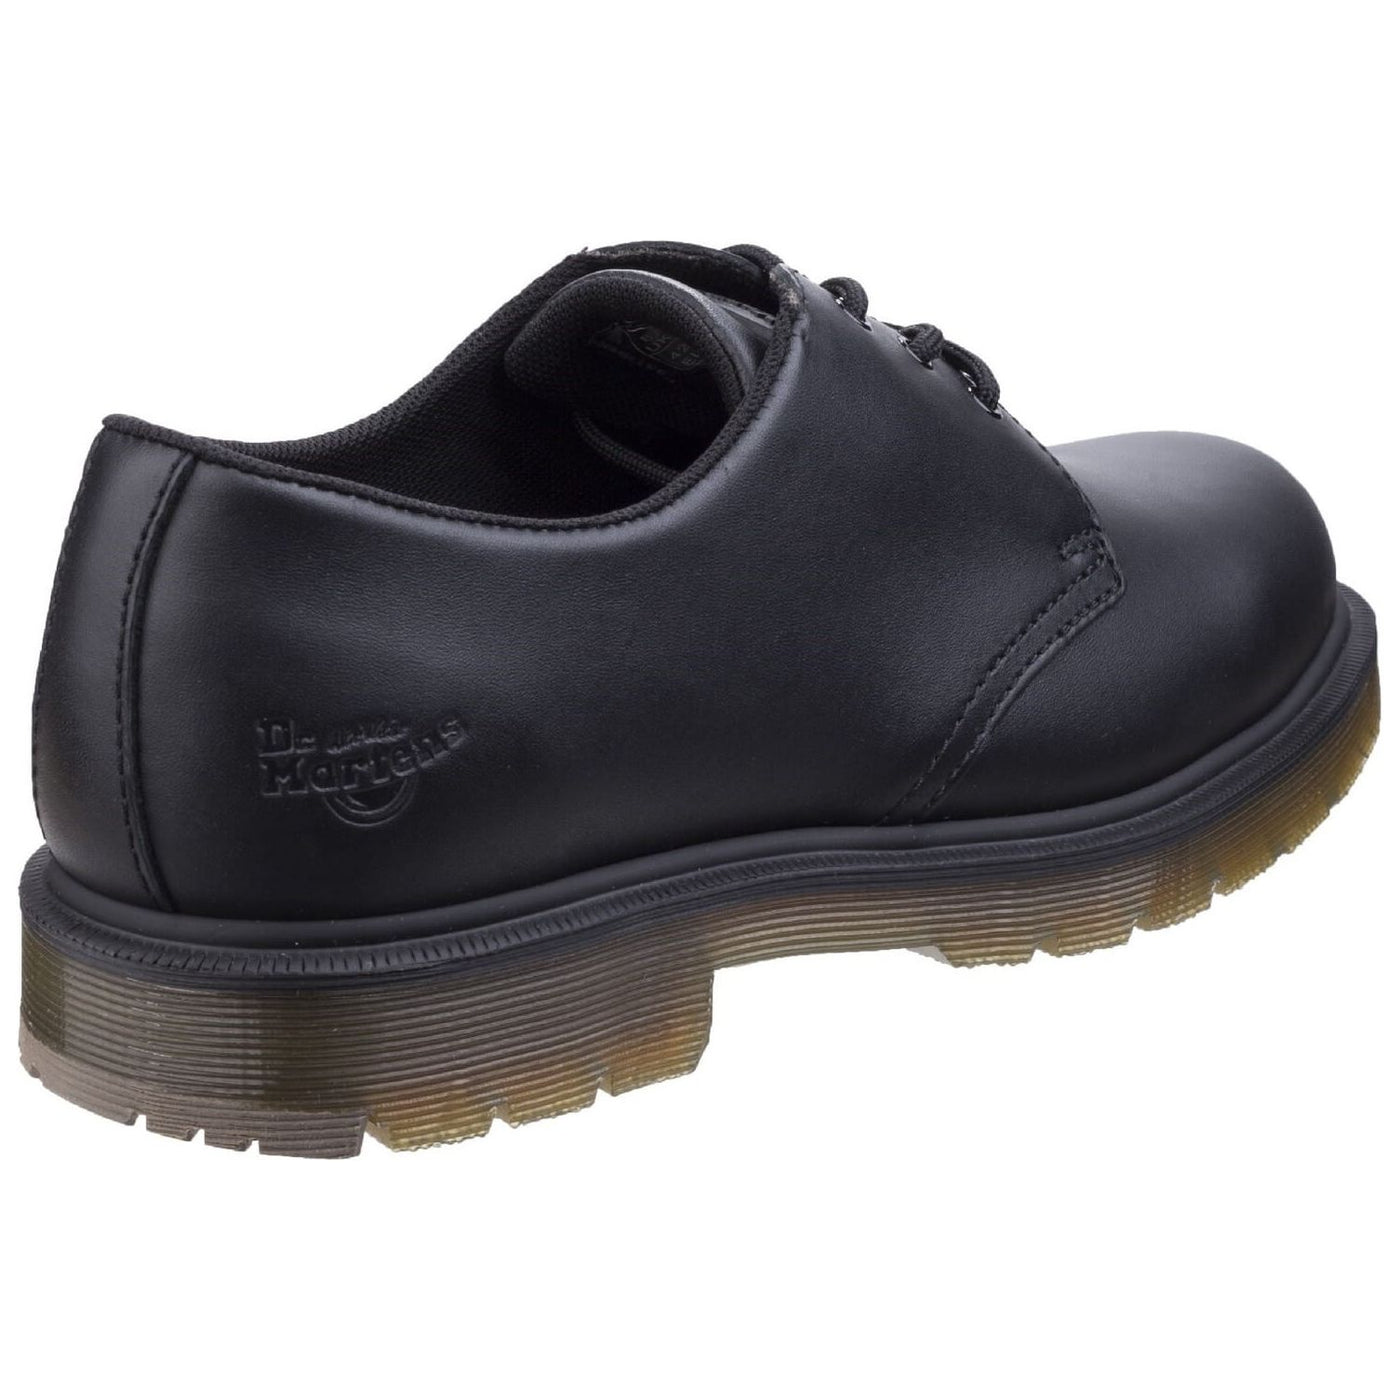 Dr Martens Arlington NS Occupational Shoes-Black Industrial Full Grain-2